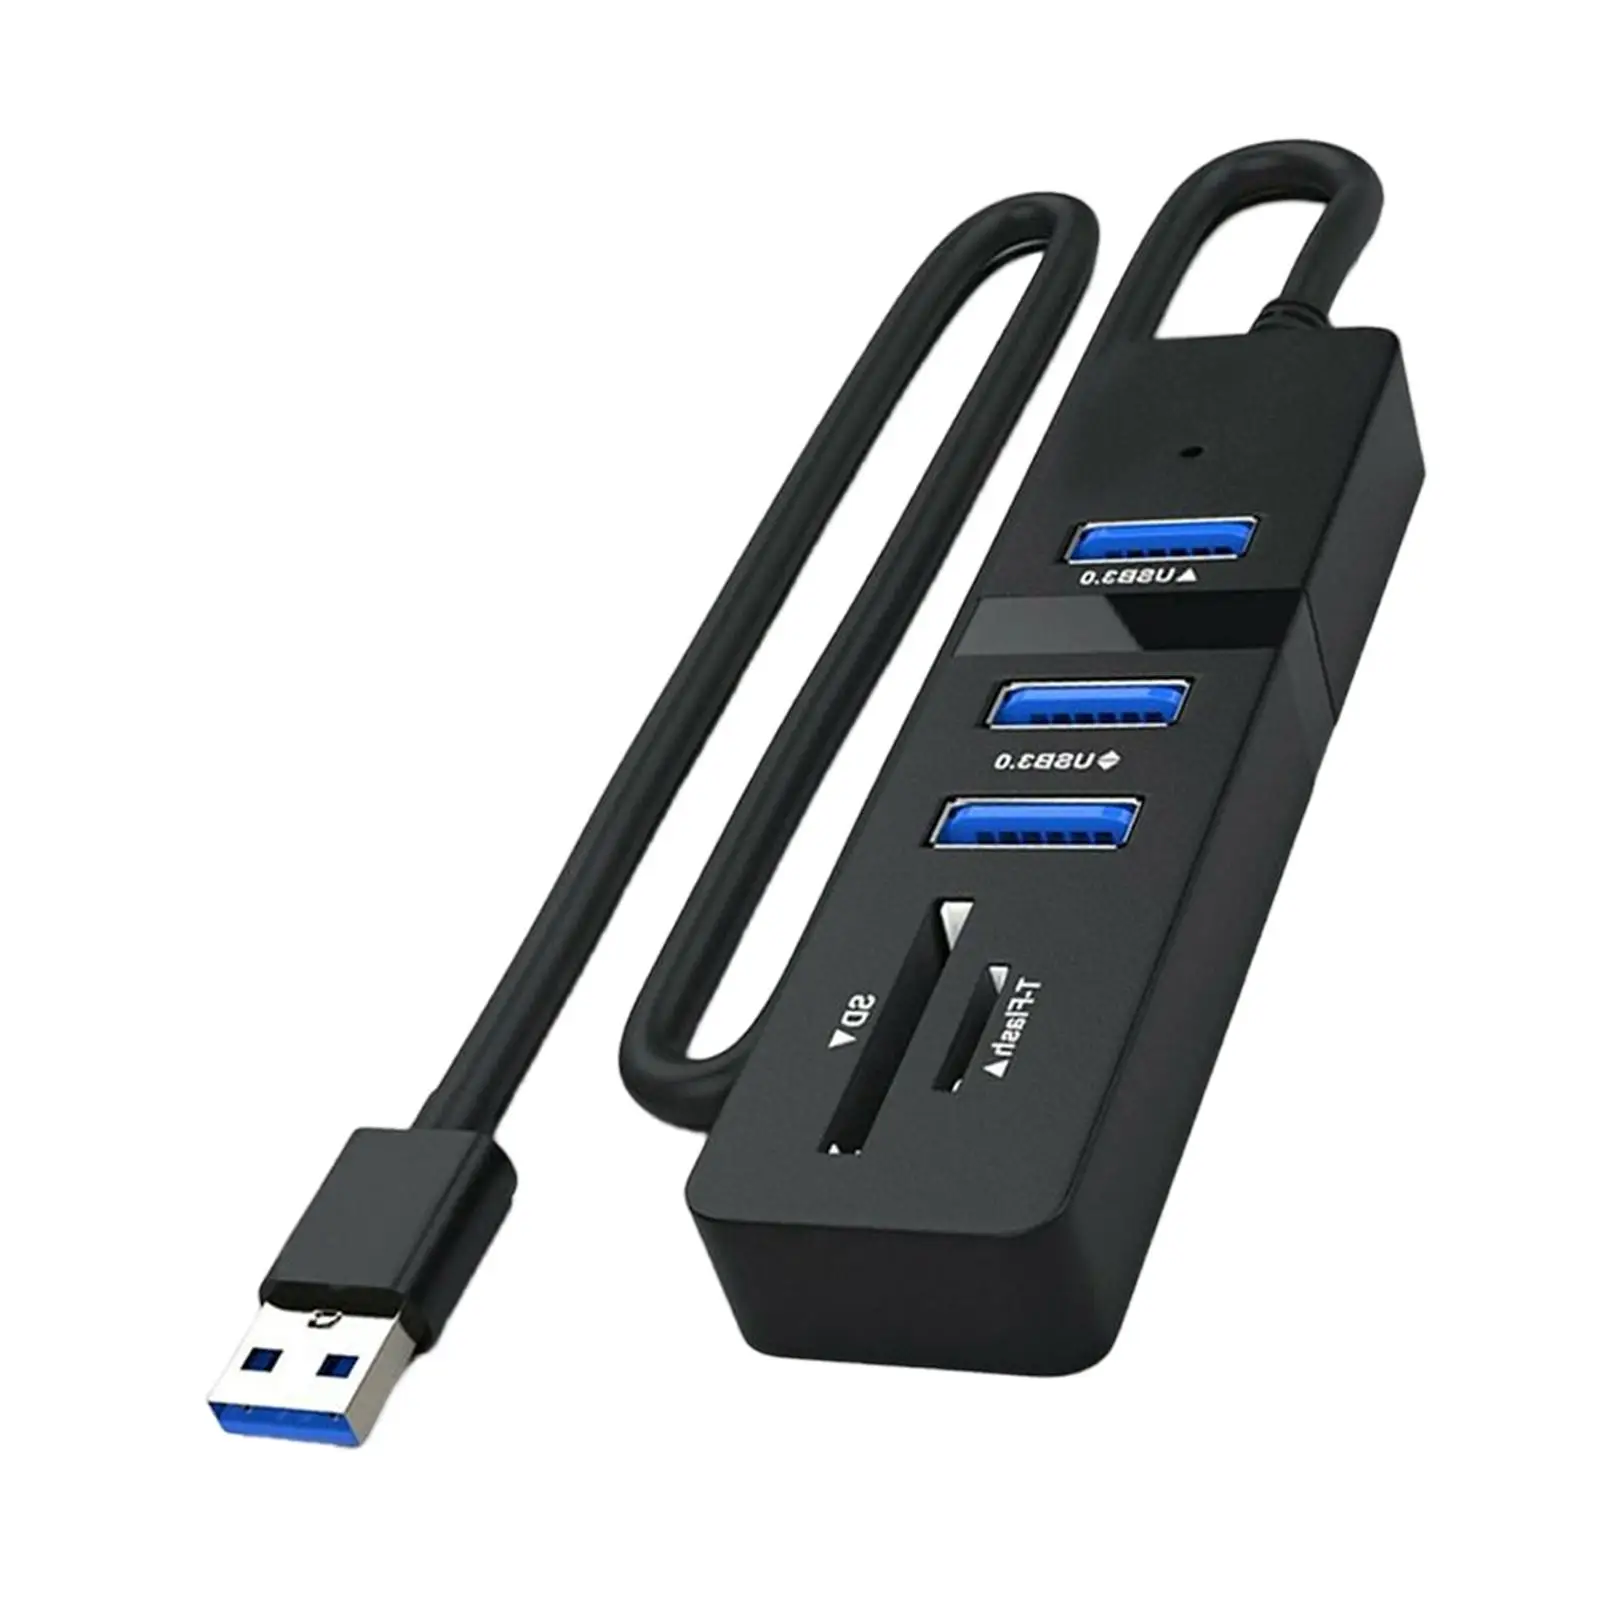 Portable three ports USB 3.0 Hub Easy to Set up Plug and play Multi Splitter TF SD Card Slot Data USB Hub Adapter for Desktop PC